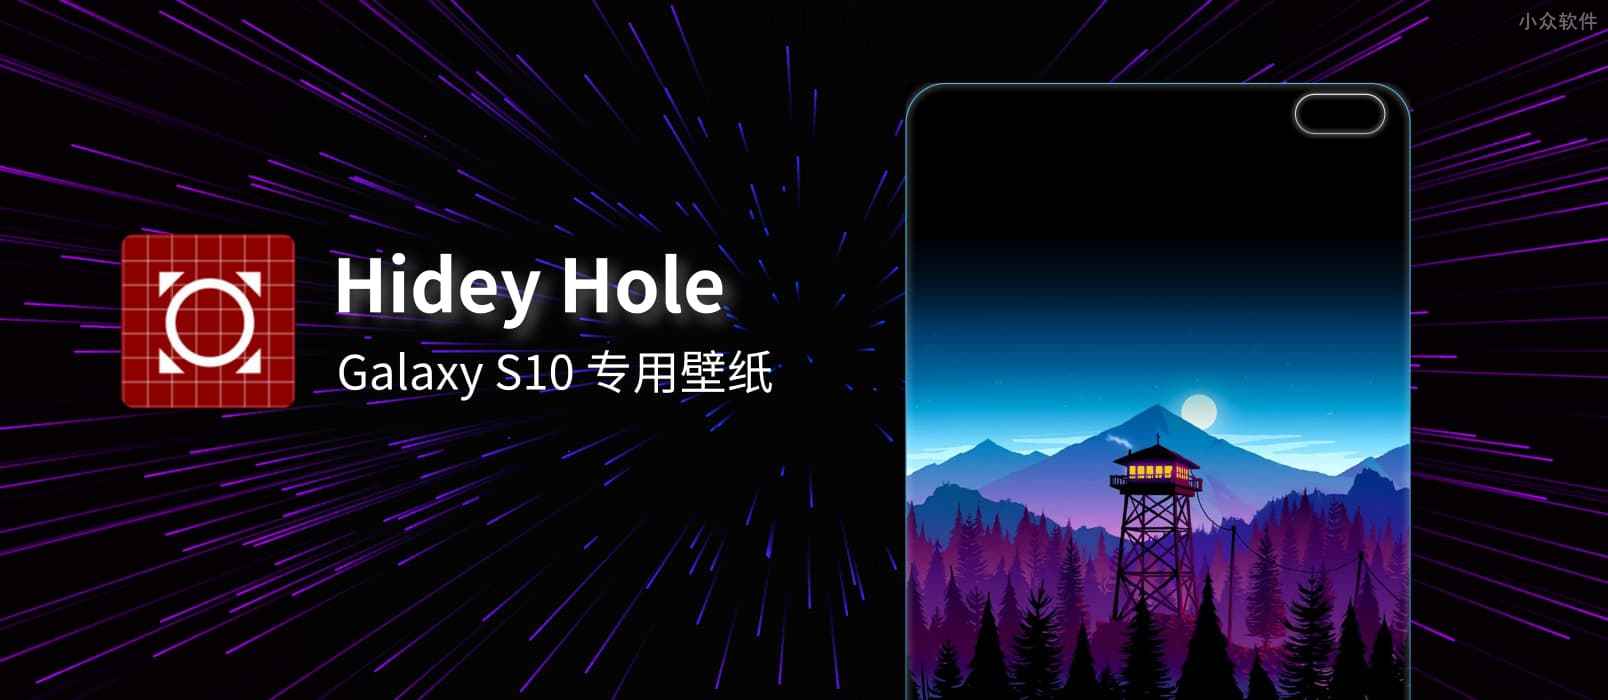 Hidey Hole - Galaxy S10 专用壁纸集，主要用于遮挡相机（隐藏孔洞） 1